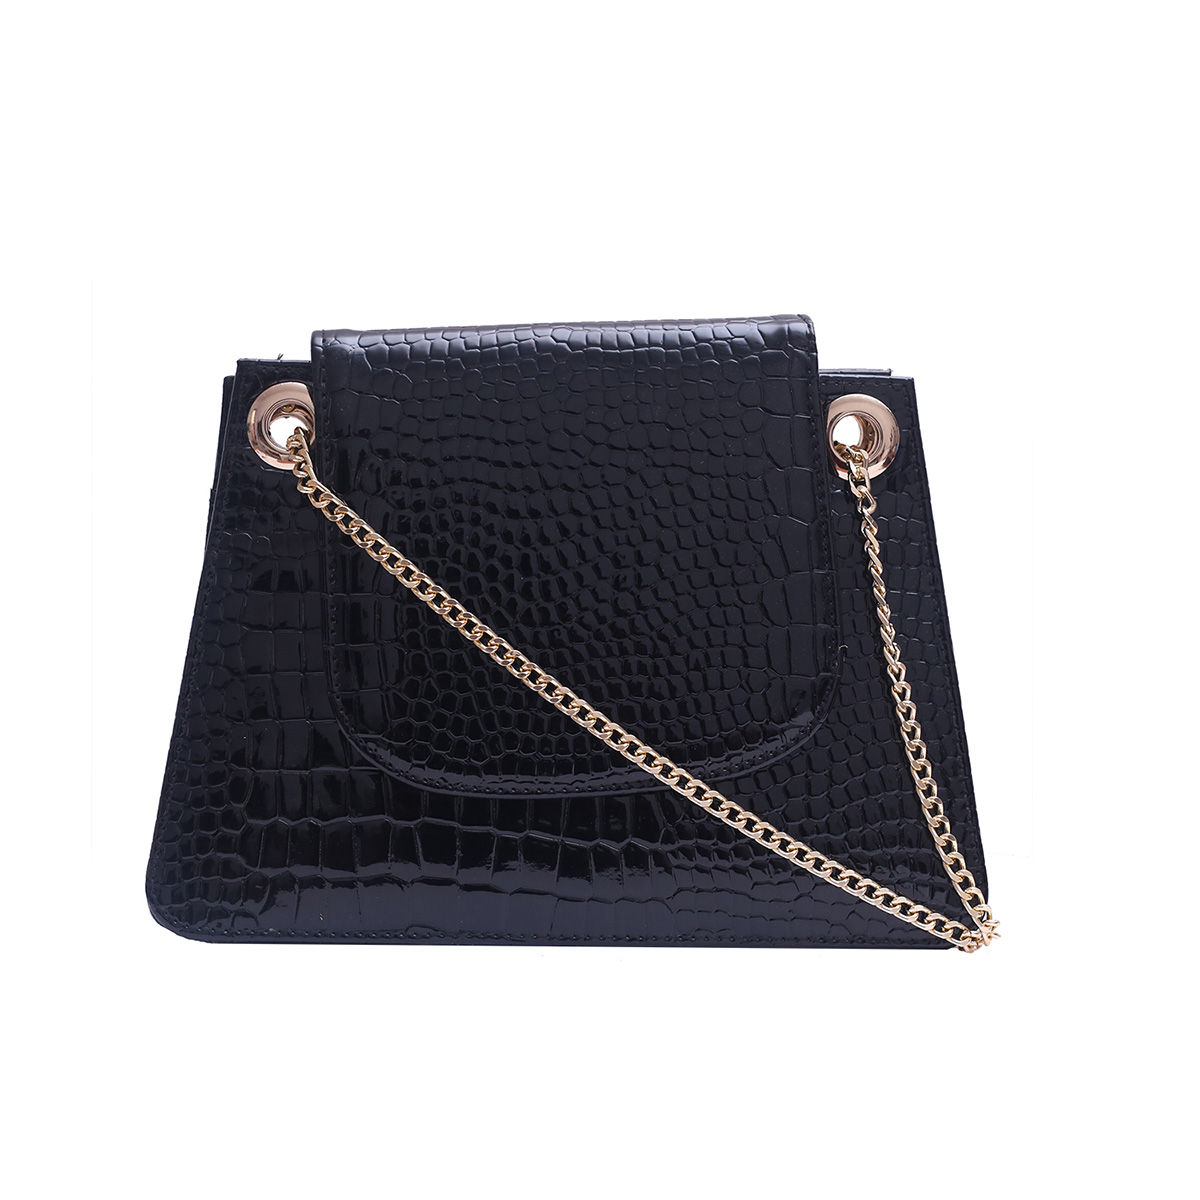 Shoulder bag - Black/Crocodile-patterned - Ladies | H&M IN